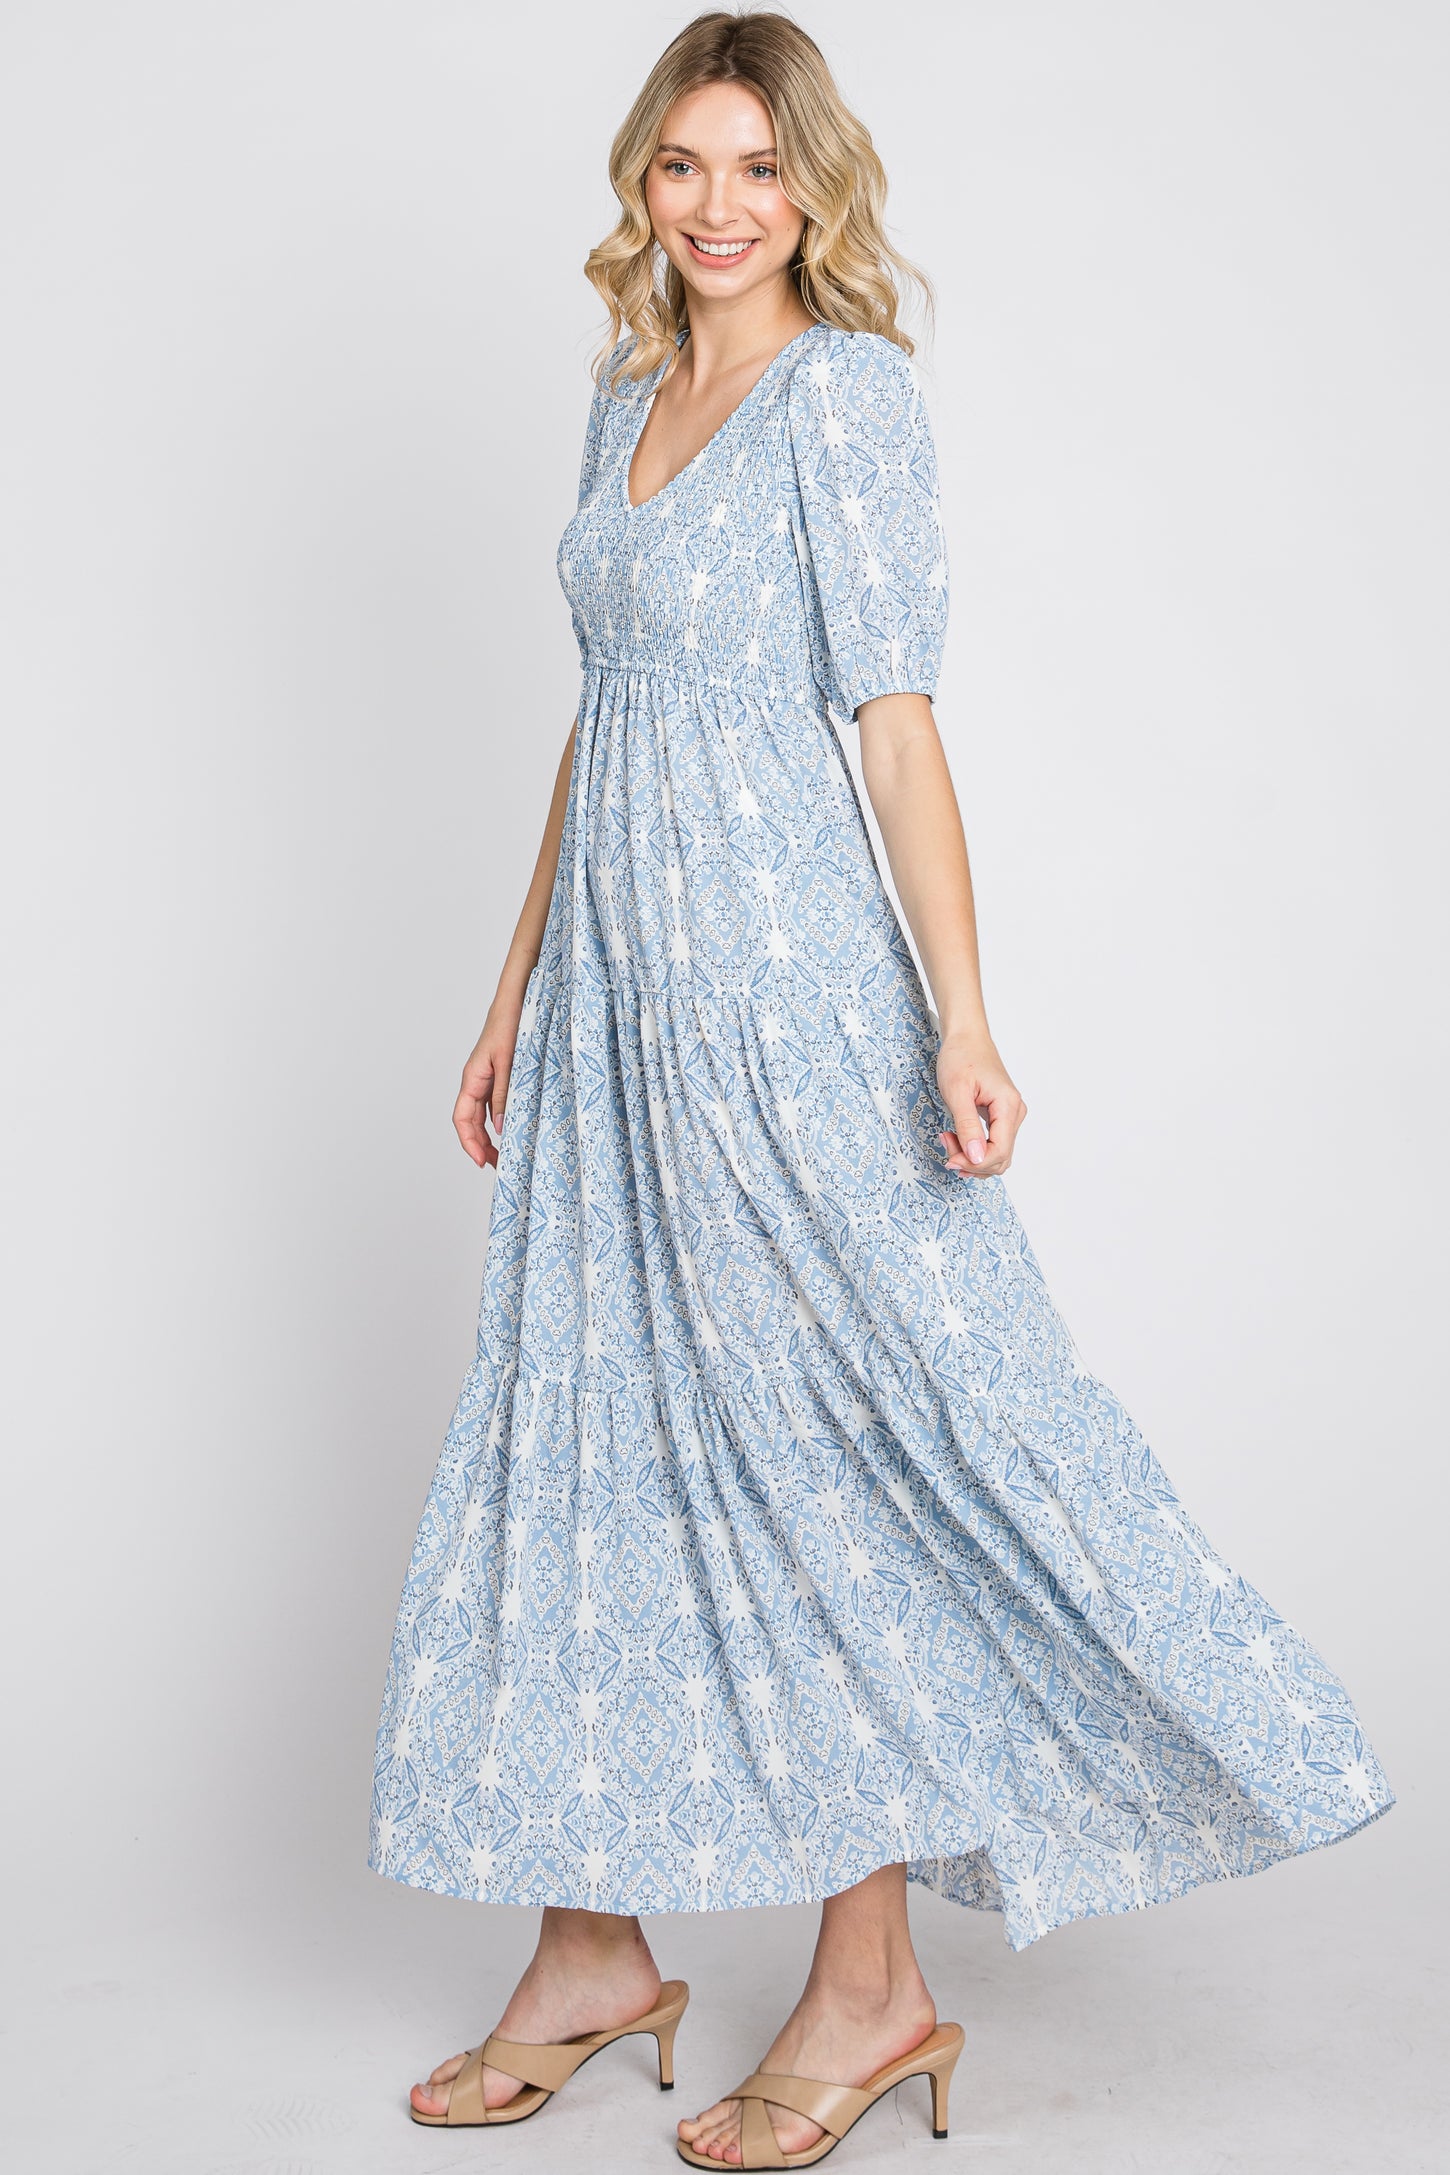 Breezies Sleep Dress with Lace Detail- SKY BLUE,X-LARGE A573640